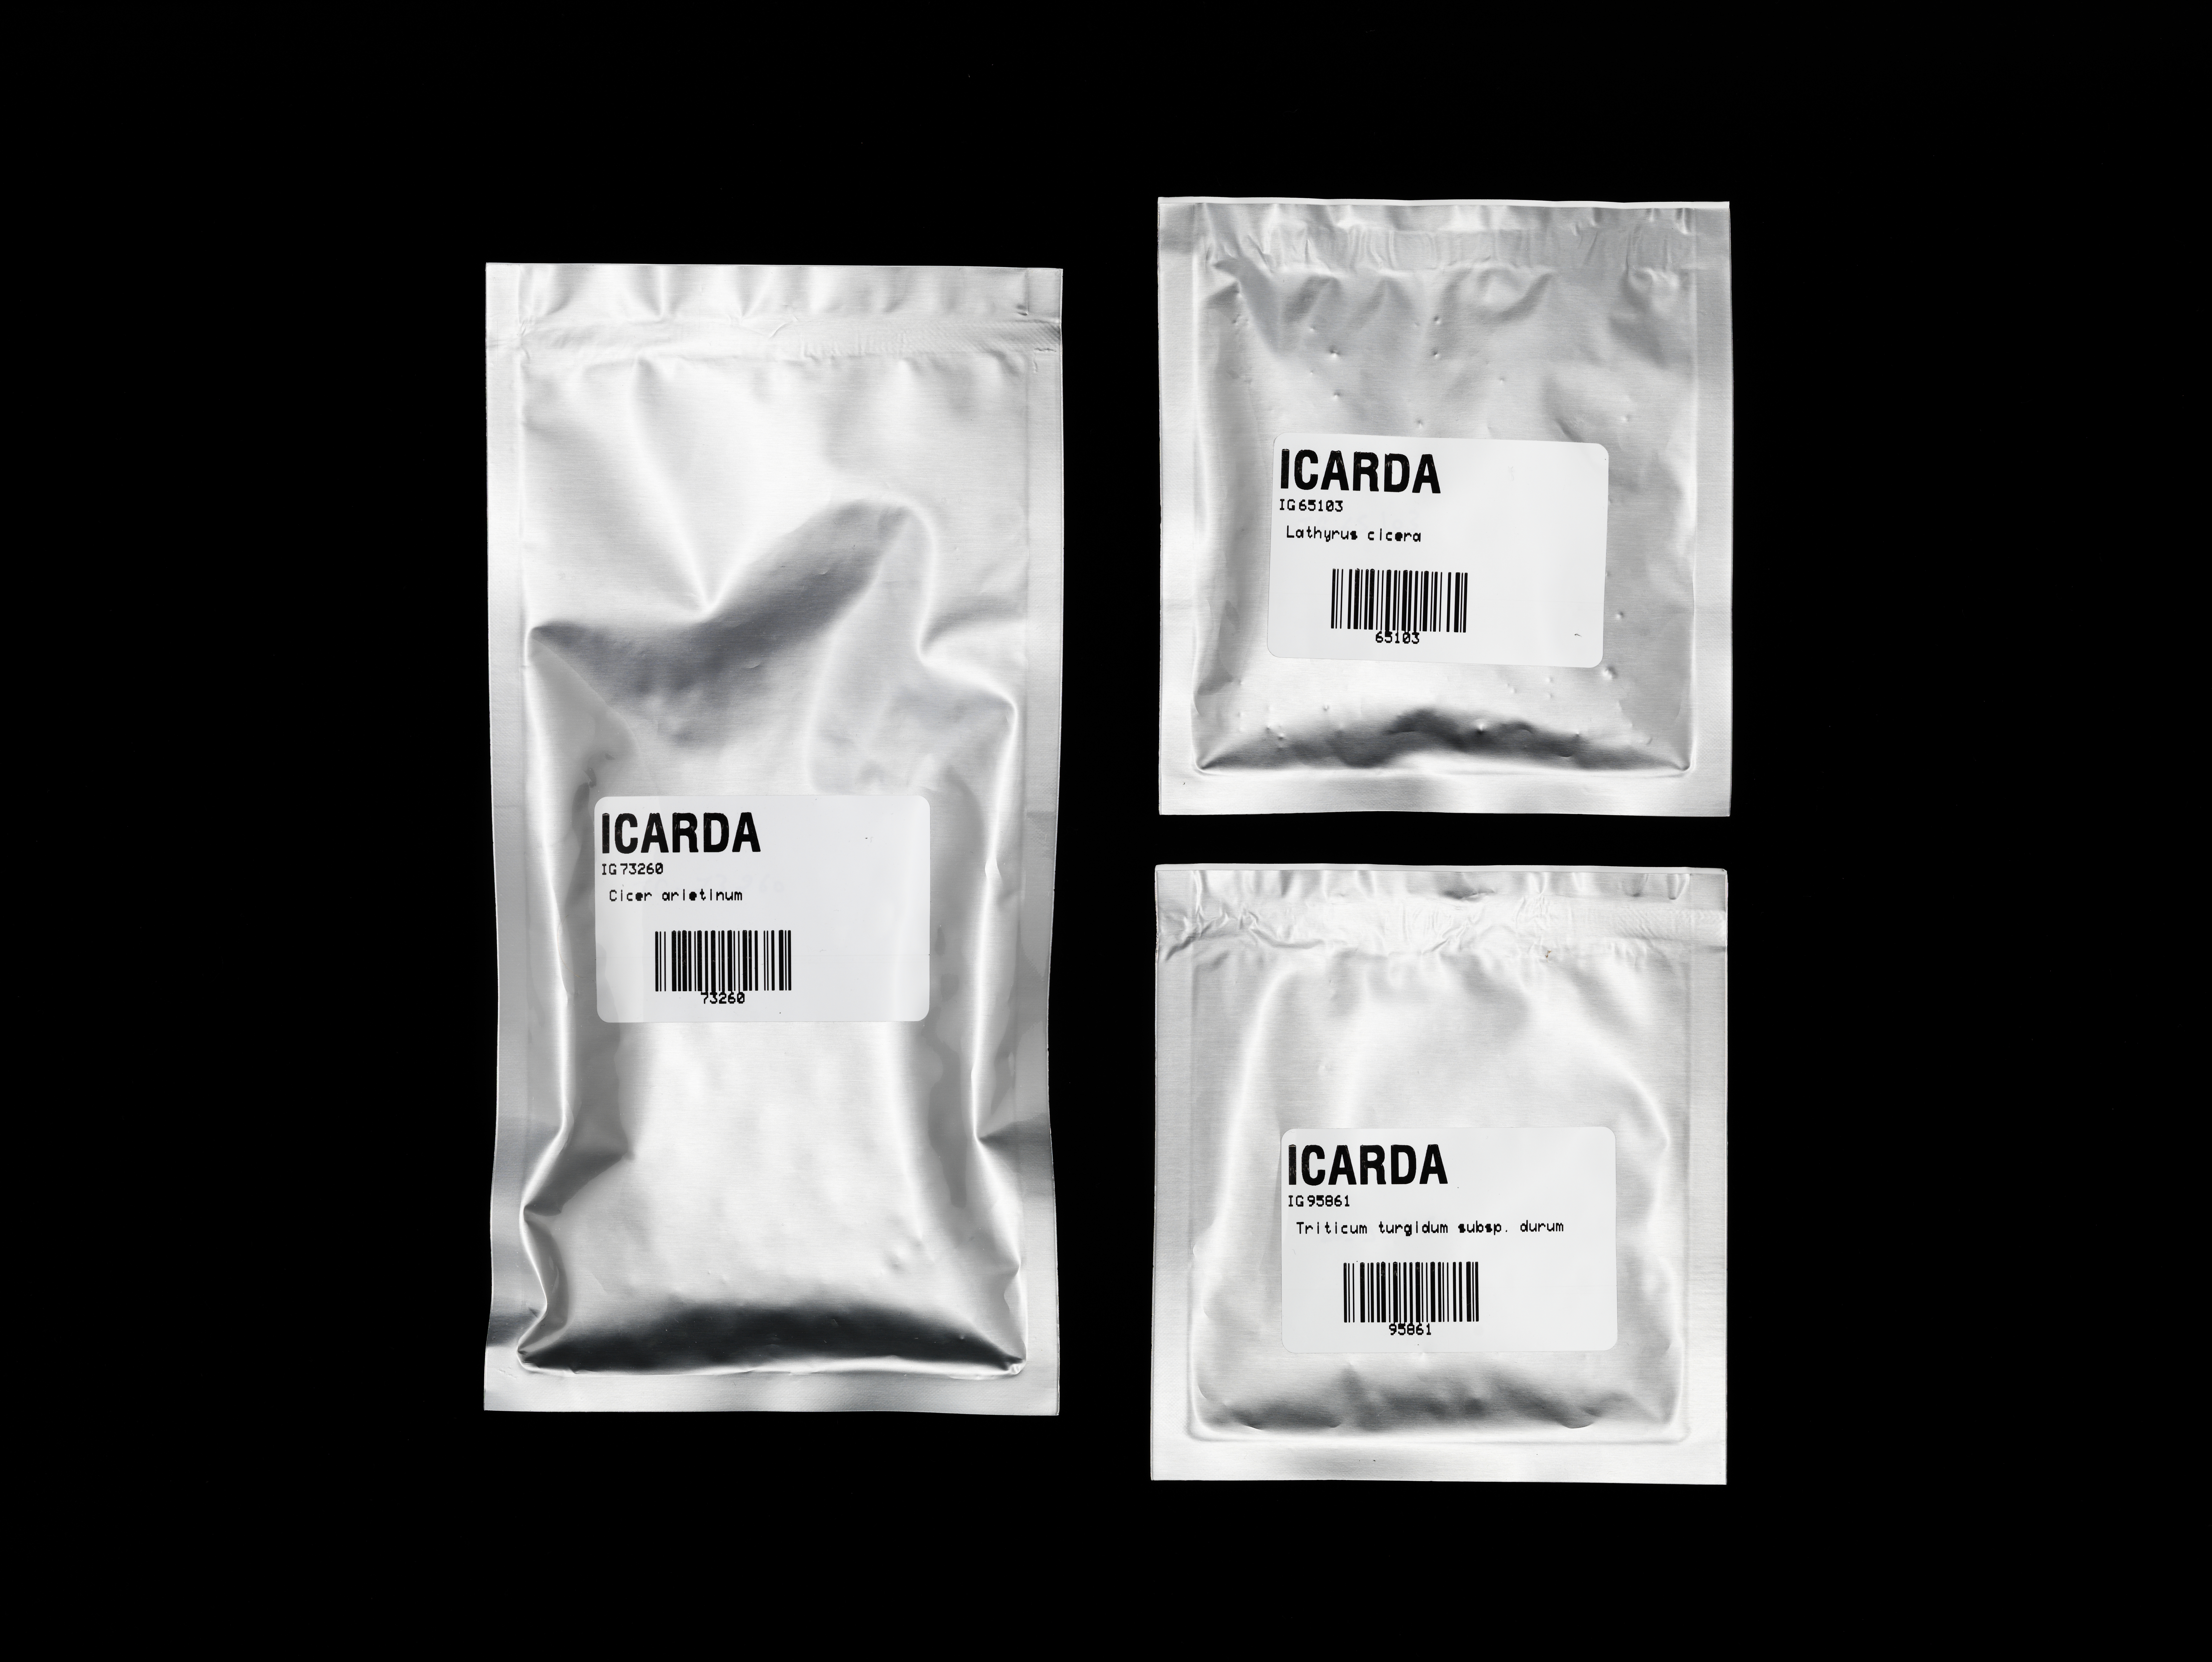 ICARDA seeds from Svalbard Global Seed Vault, 2019